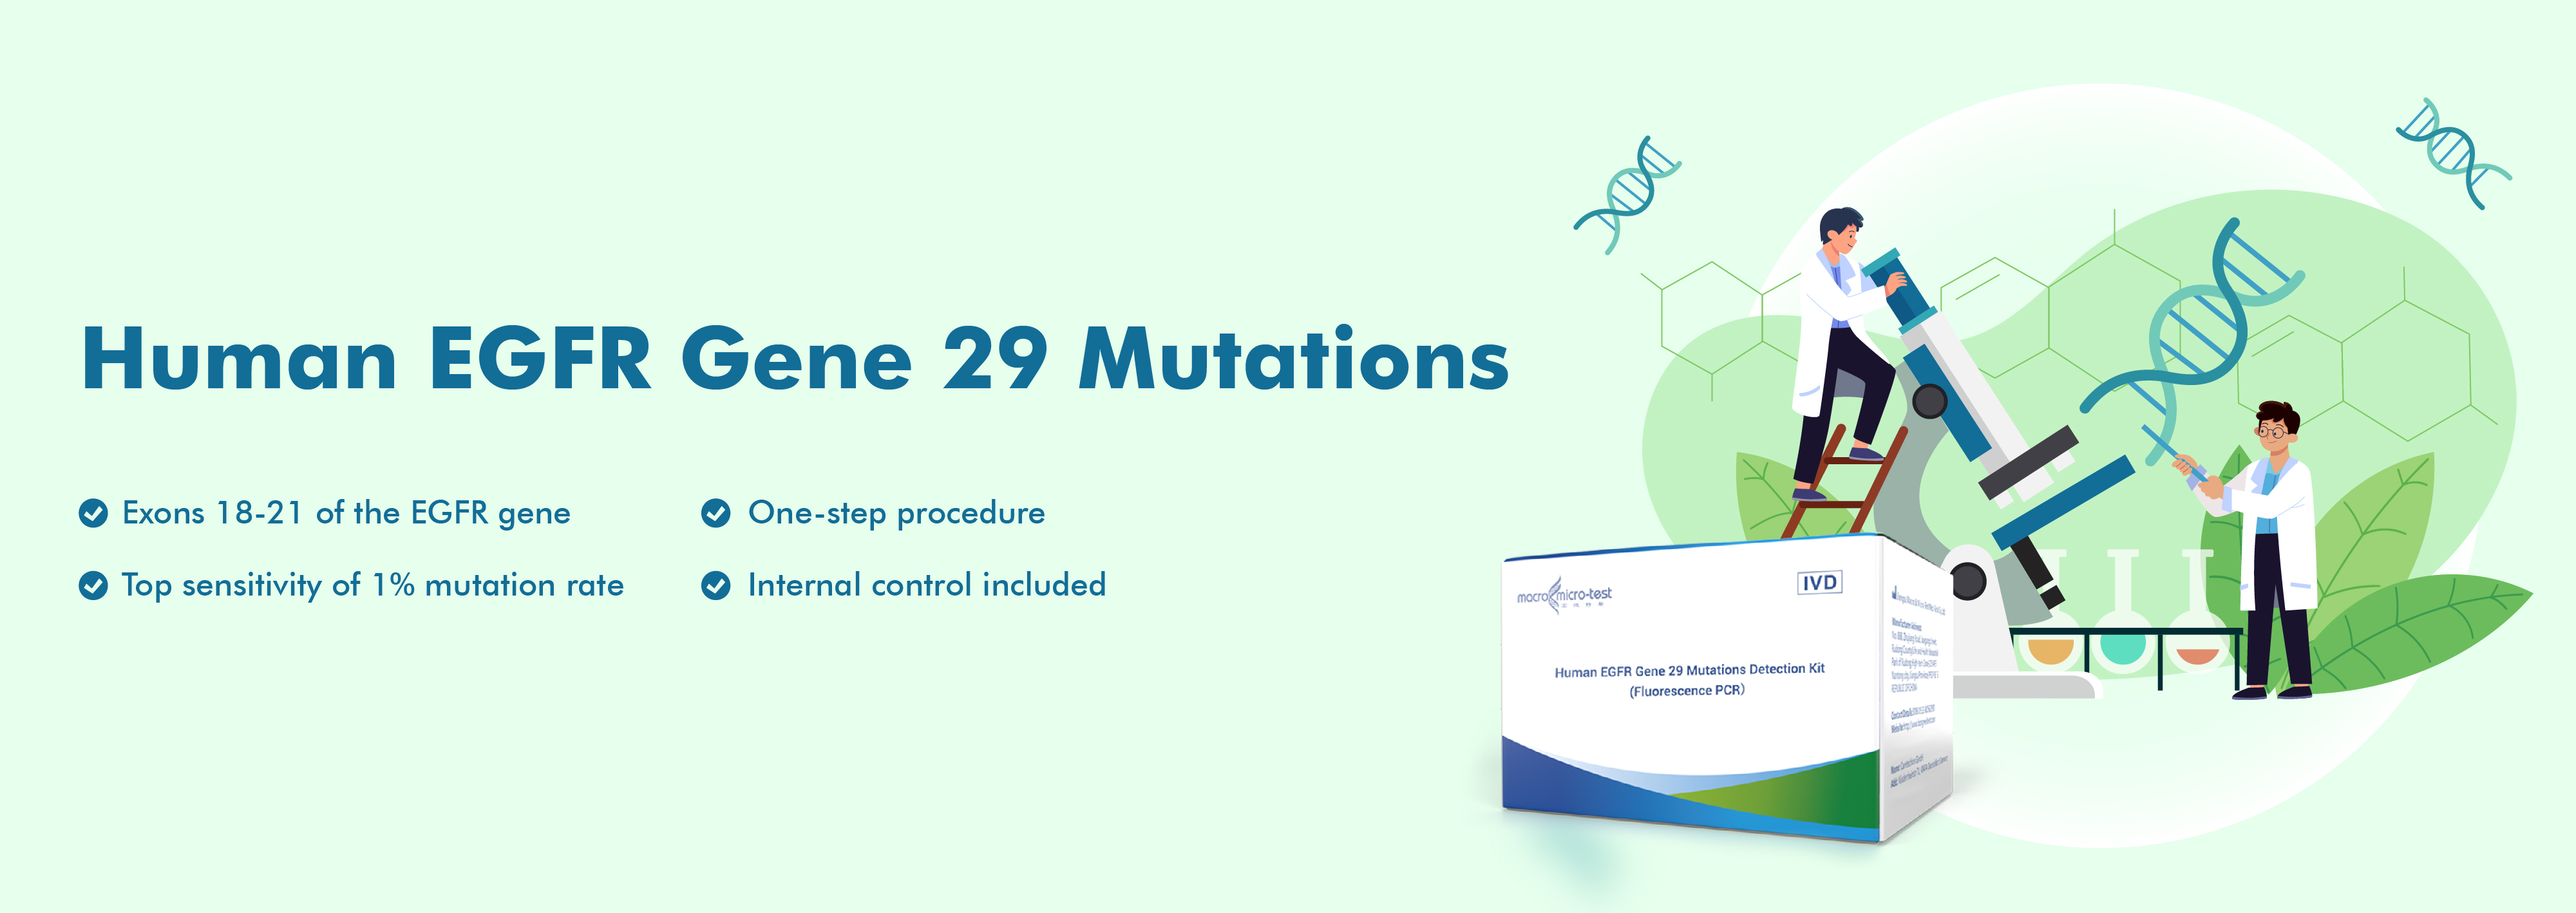 Мутации гена 29 EGFR человека